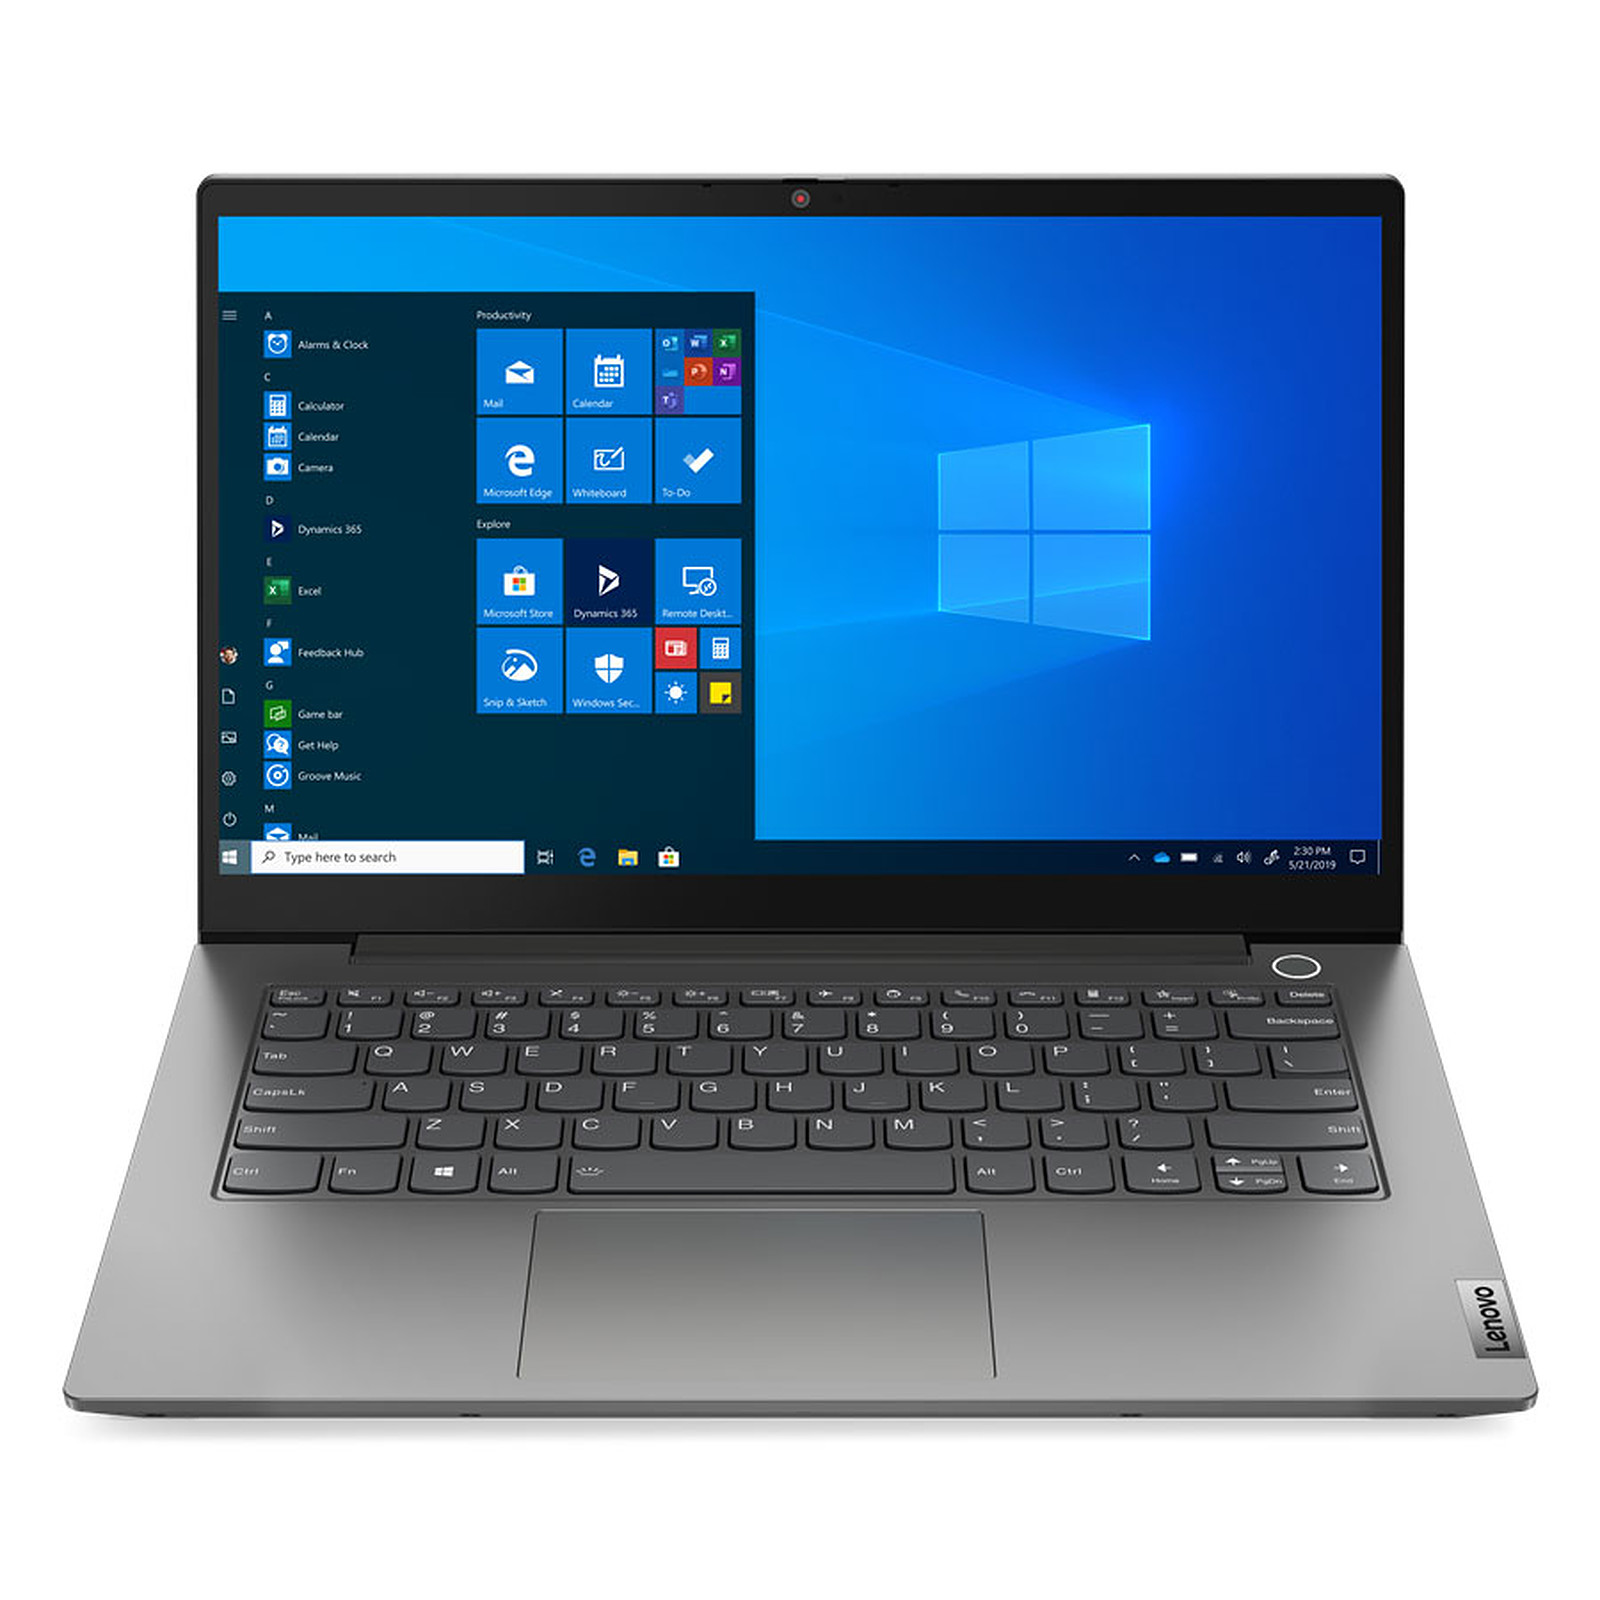  Portátil Core i3 14'' - Lenovo ThinkBook 14 G2 ITL / 20VD00KBLM | 2204 - Laptop Corporativo, Intel Core i3-1115G4, Memoria RAM 8GB (Soldada), Disco SSD 256GB M.2, Pantalla HD 14'', Red Gigabit, Wi-Fi 5, Bluetooth, Windows 10 Pro 